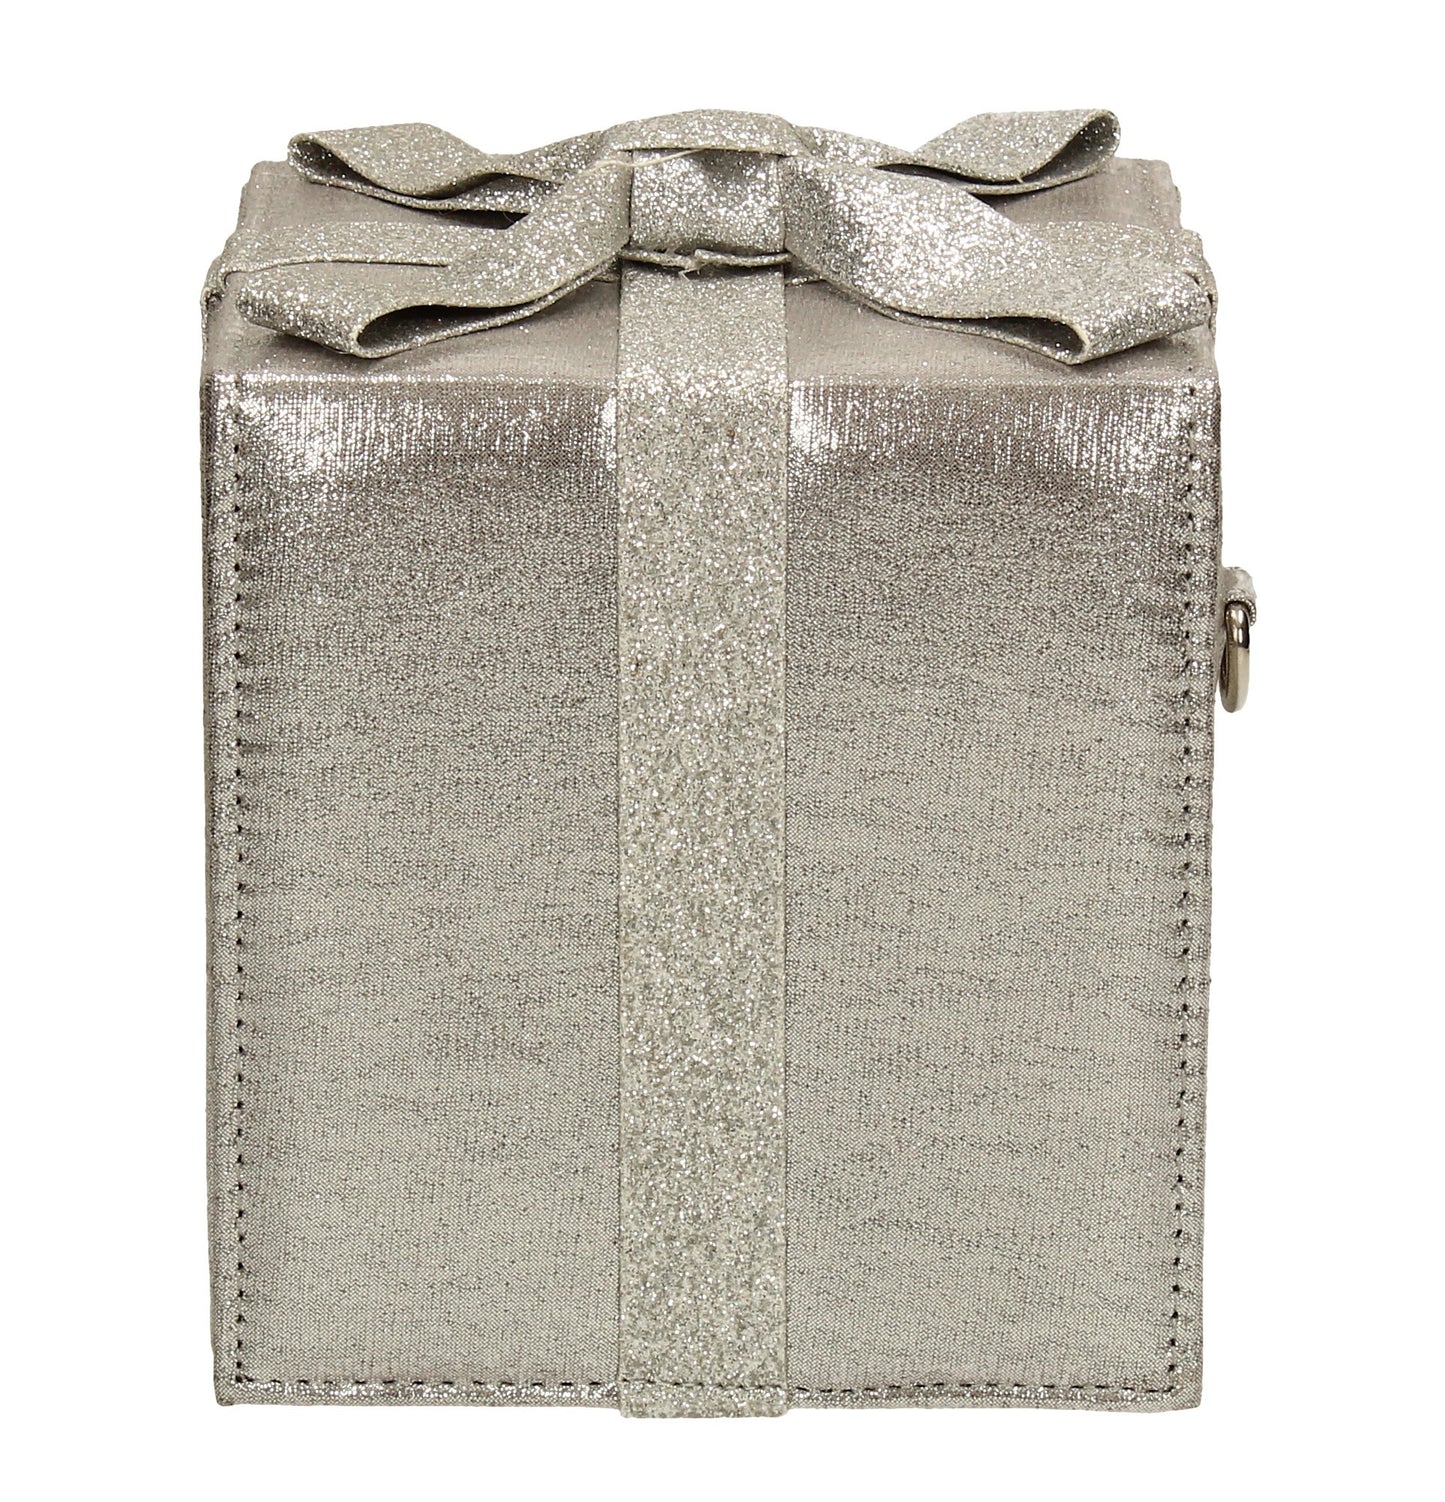 SWANKYSWANS Sara Clutch Bag Silver Cute Cheap Clutch Bag For Weddings School and Work